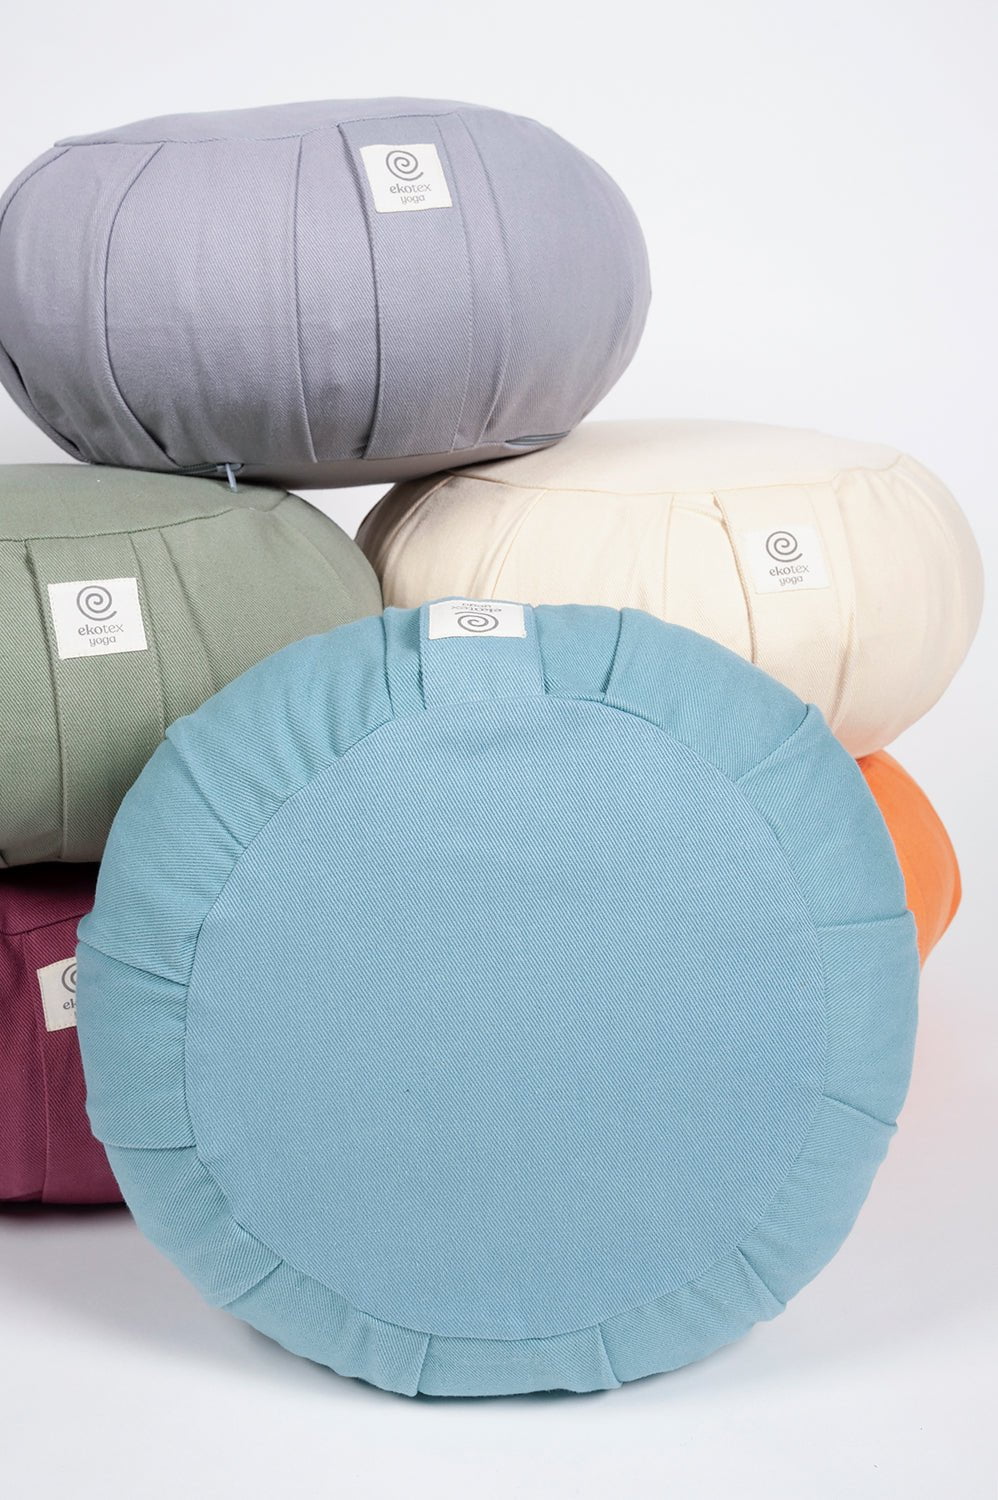 Buy Organic Cotton Round Zafu Cushion, Meditation Cushions